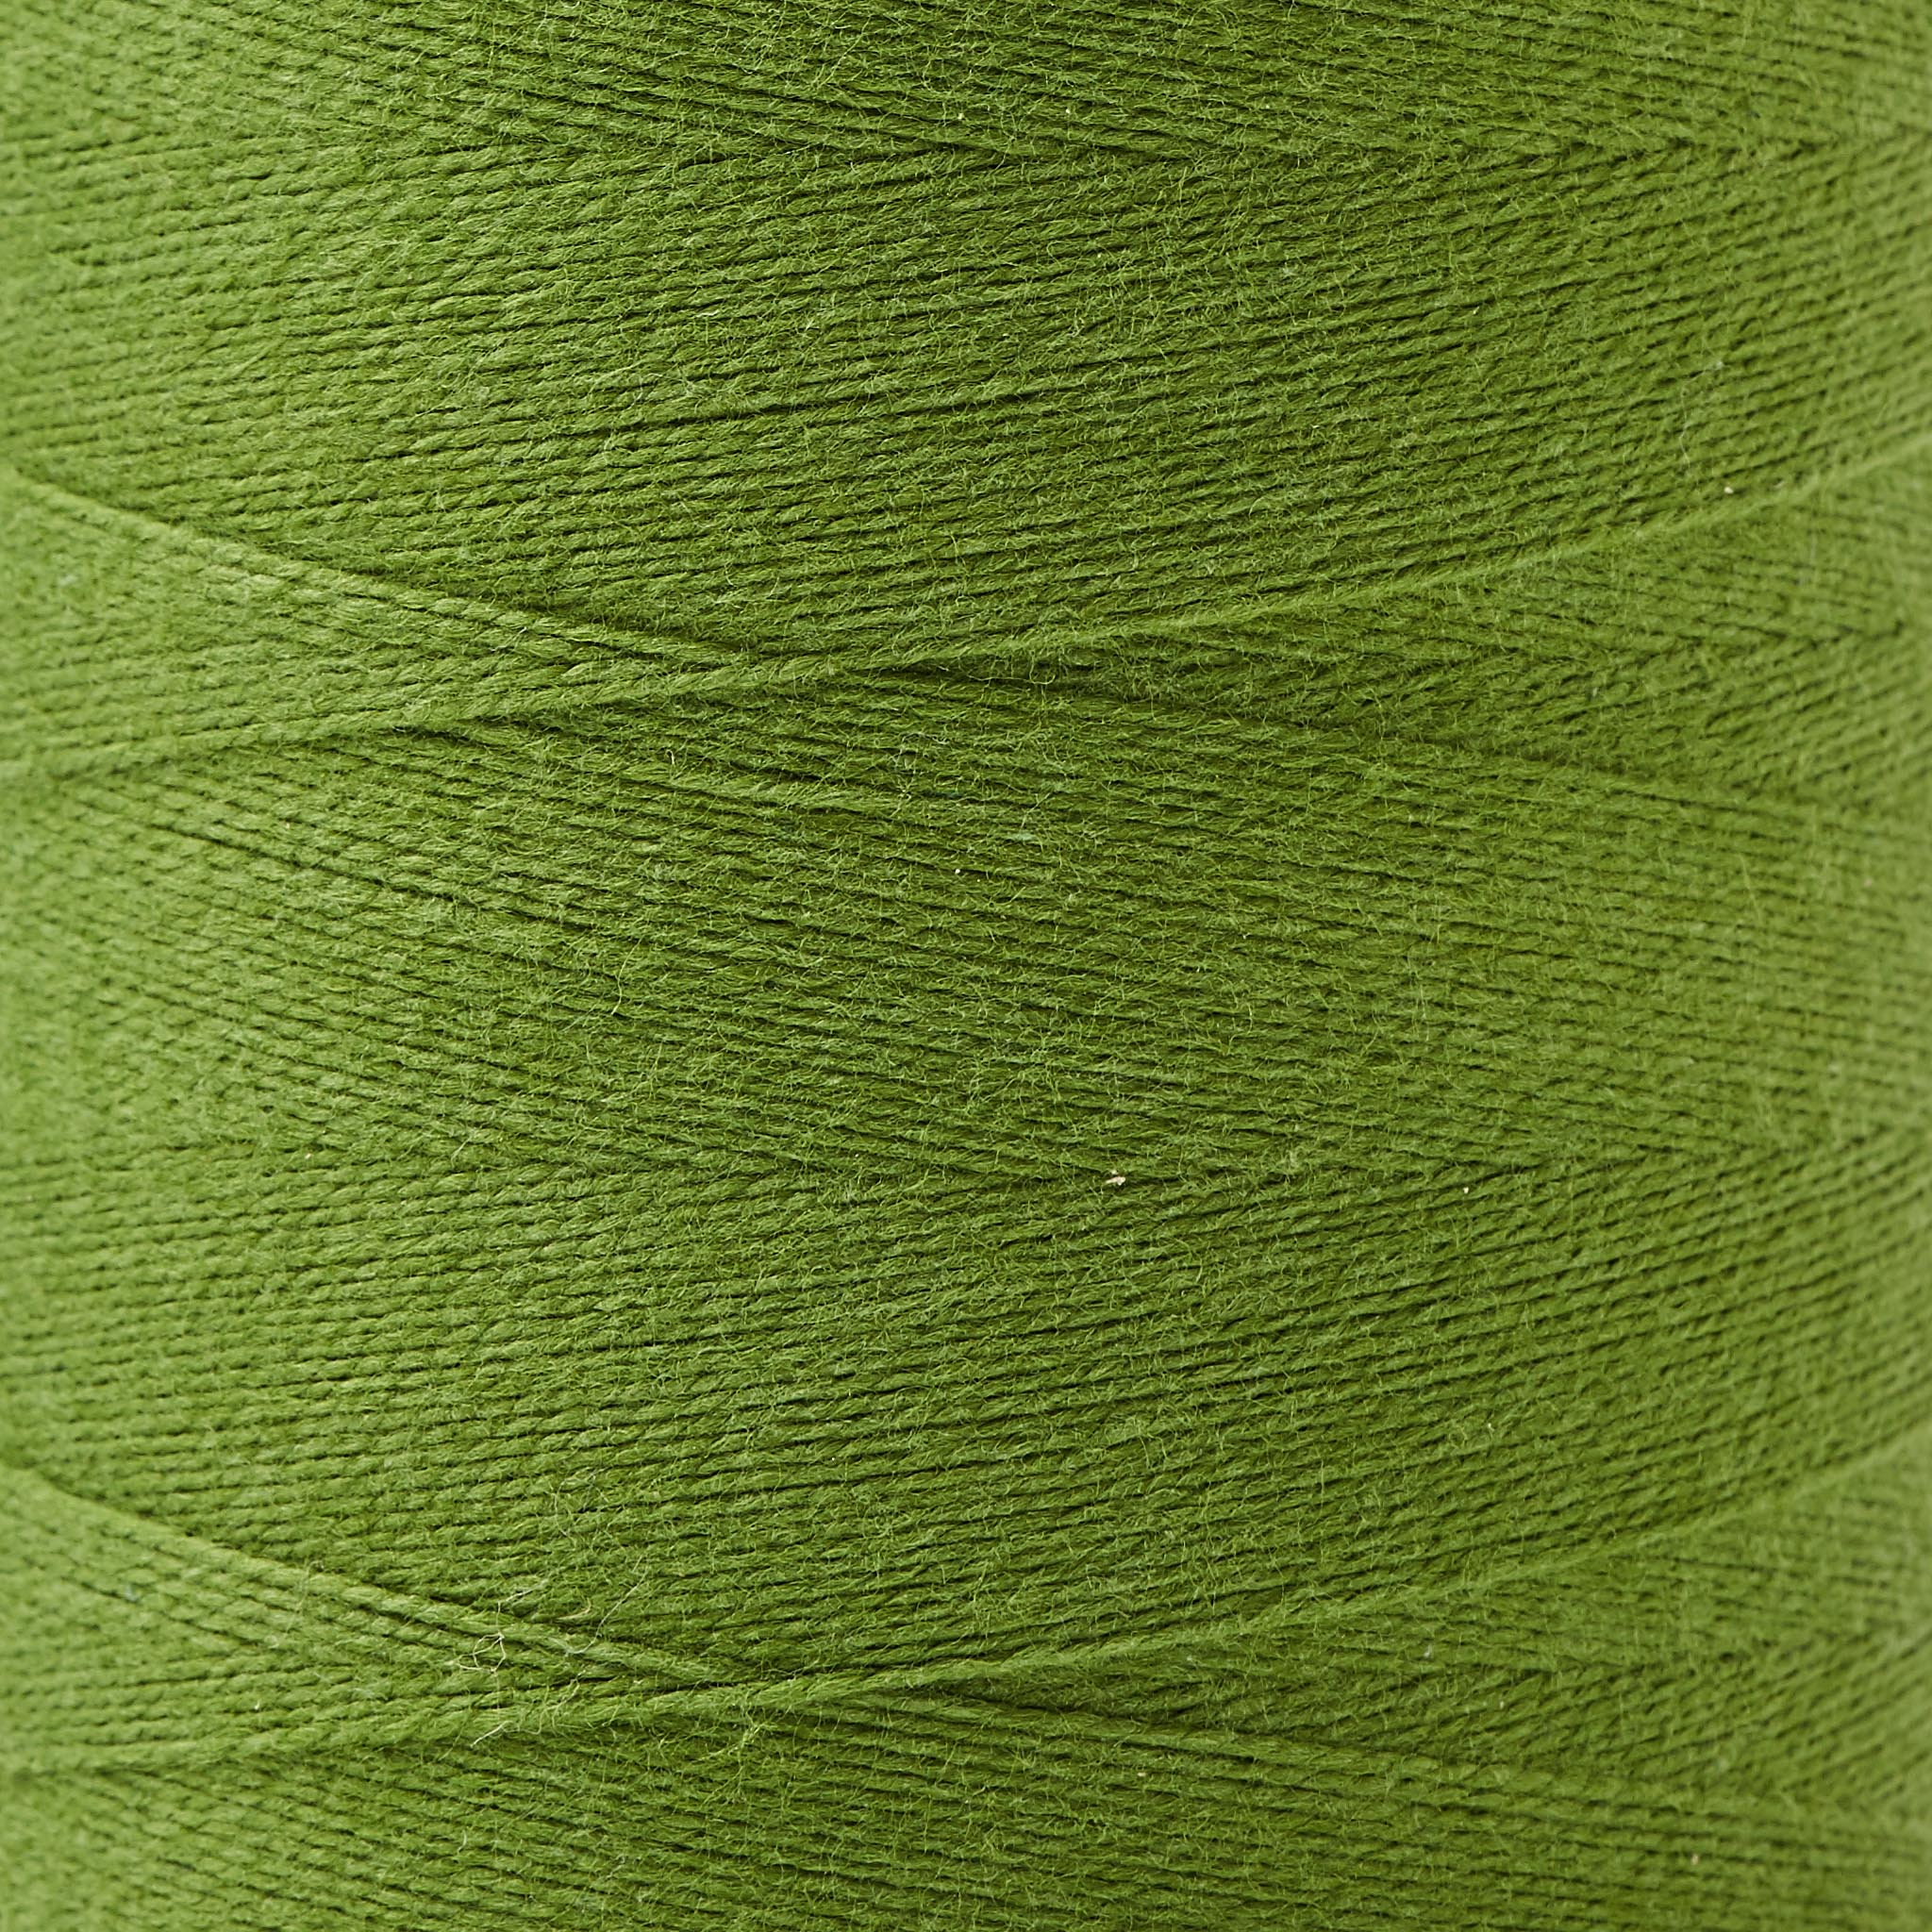 Brassard Cotton Weaving Yarn - 8/2 Un-Mercerized Cotton - Gist Yarn